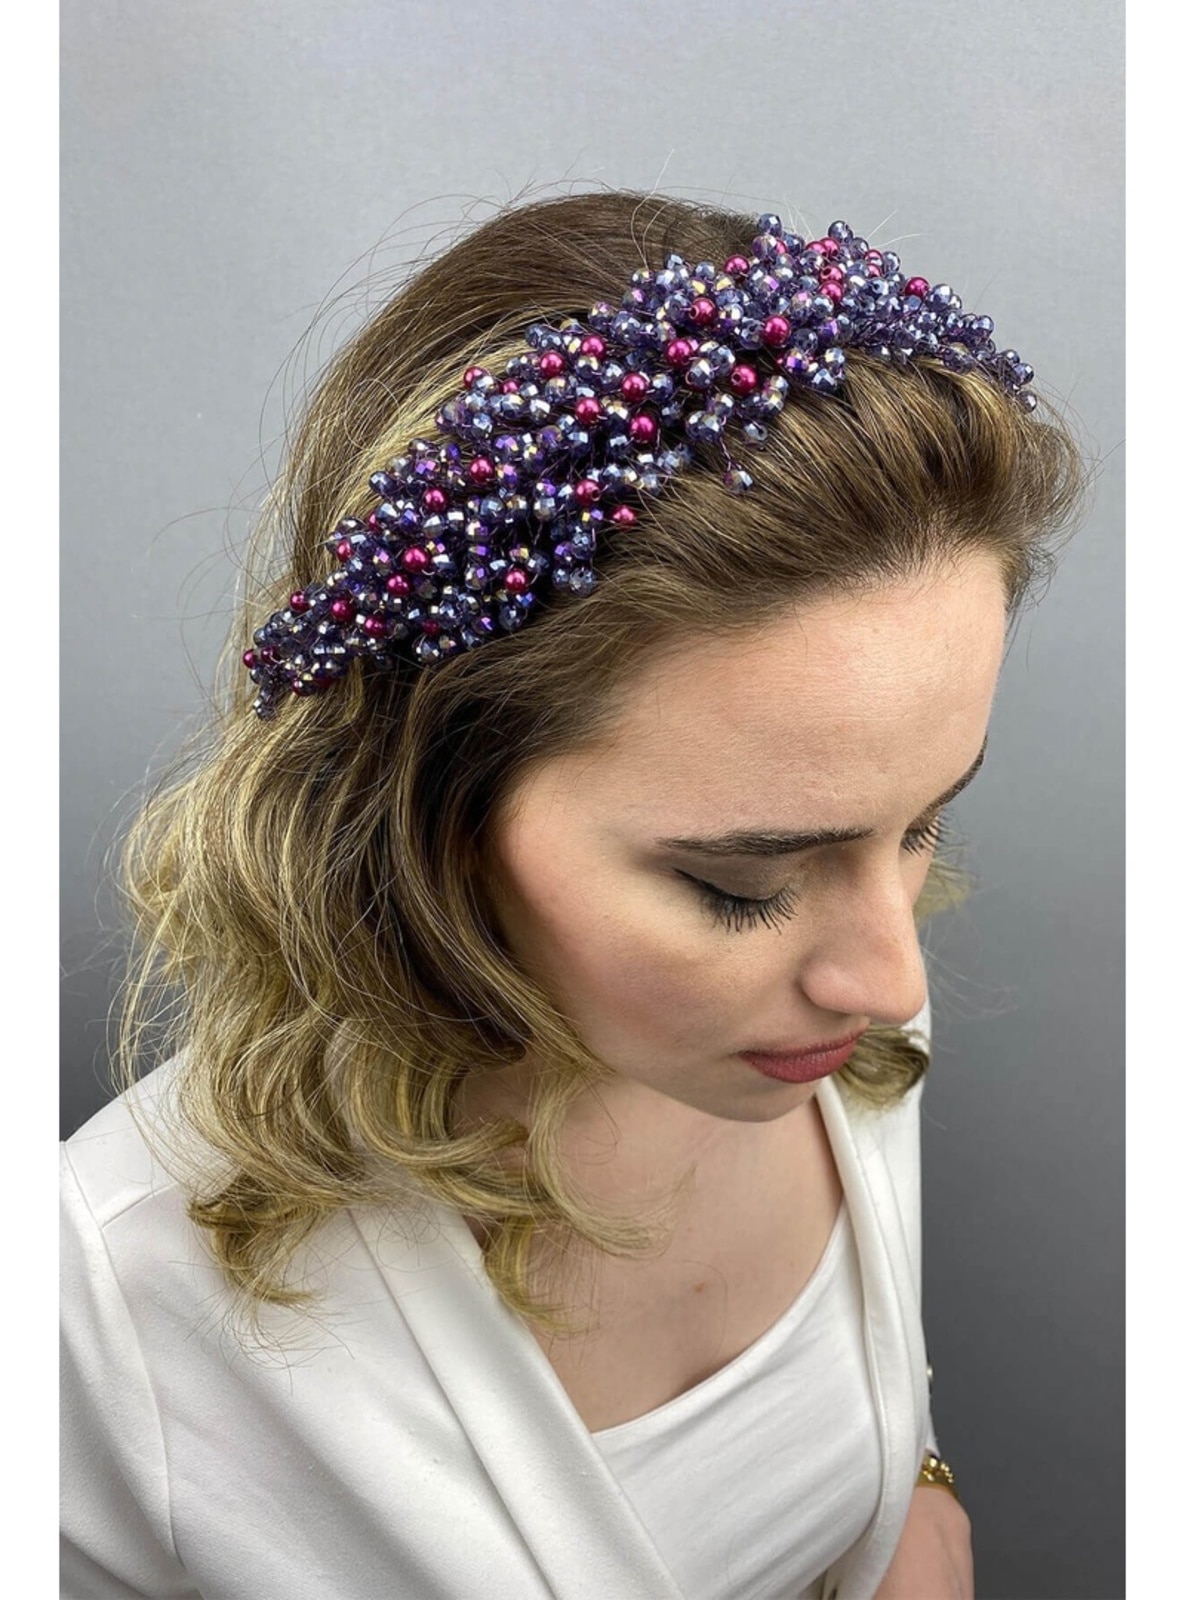 Purple - Headband